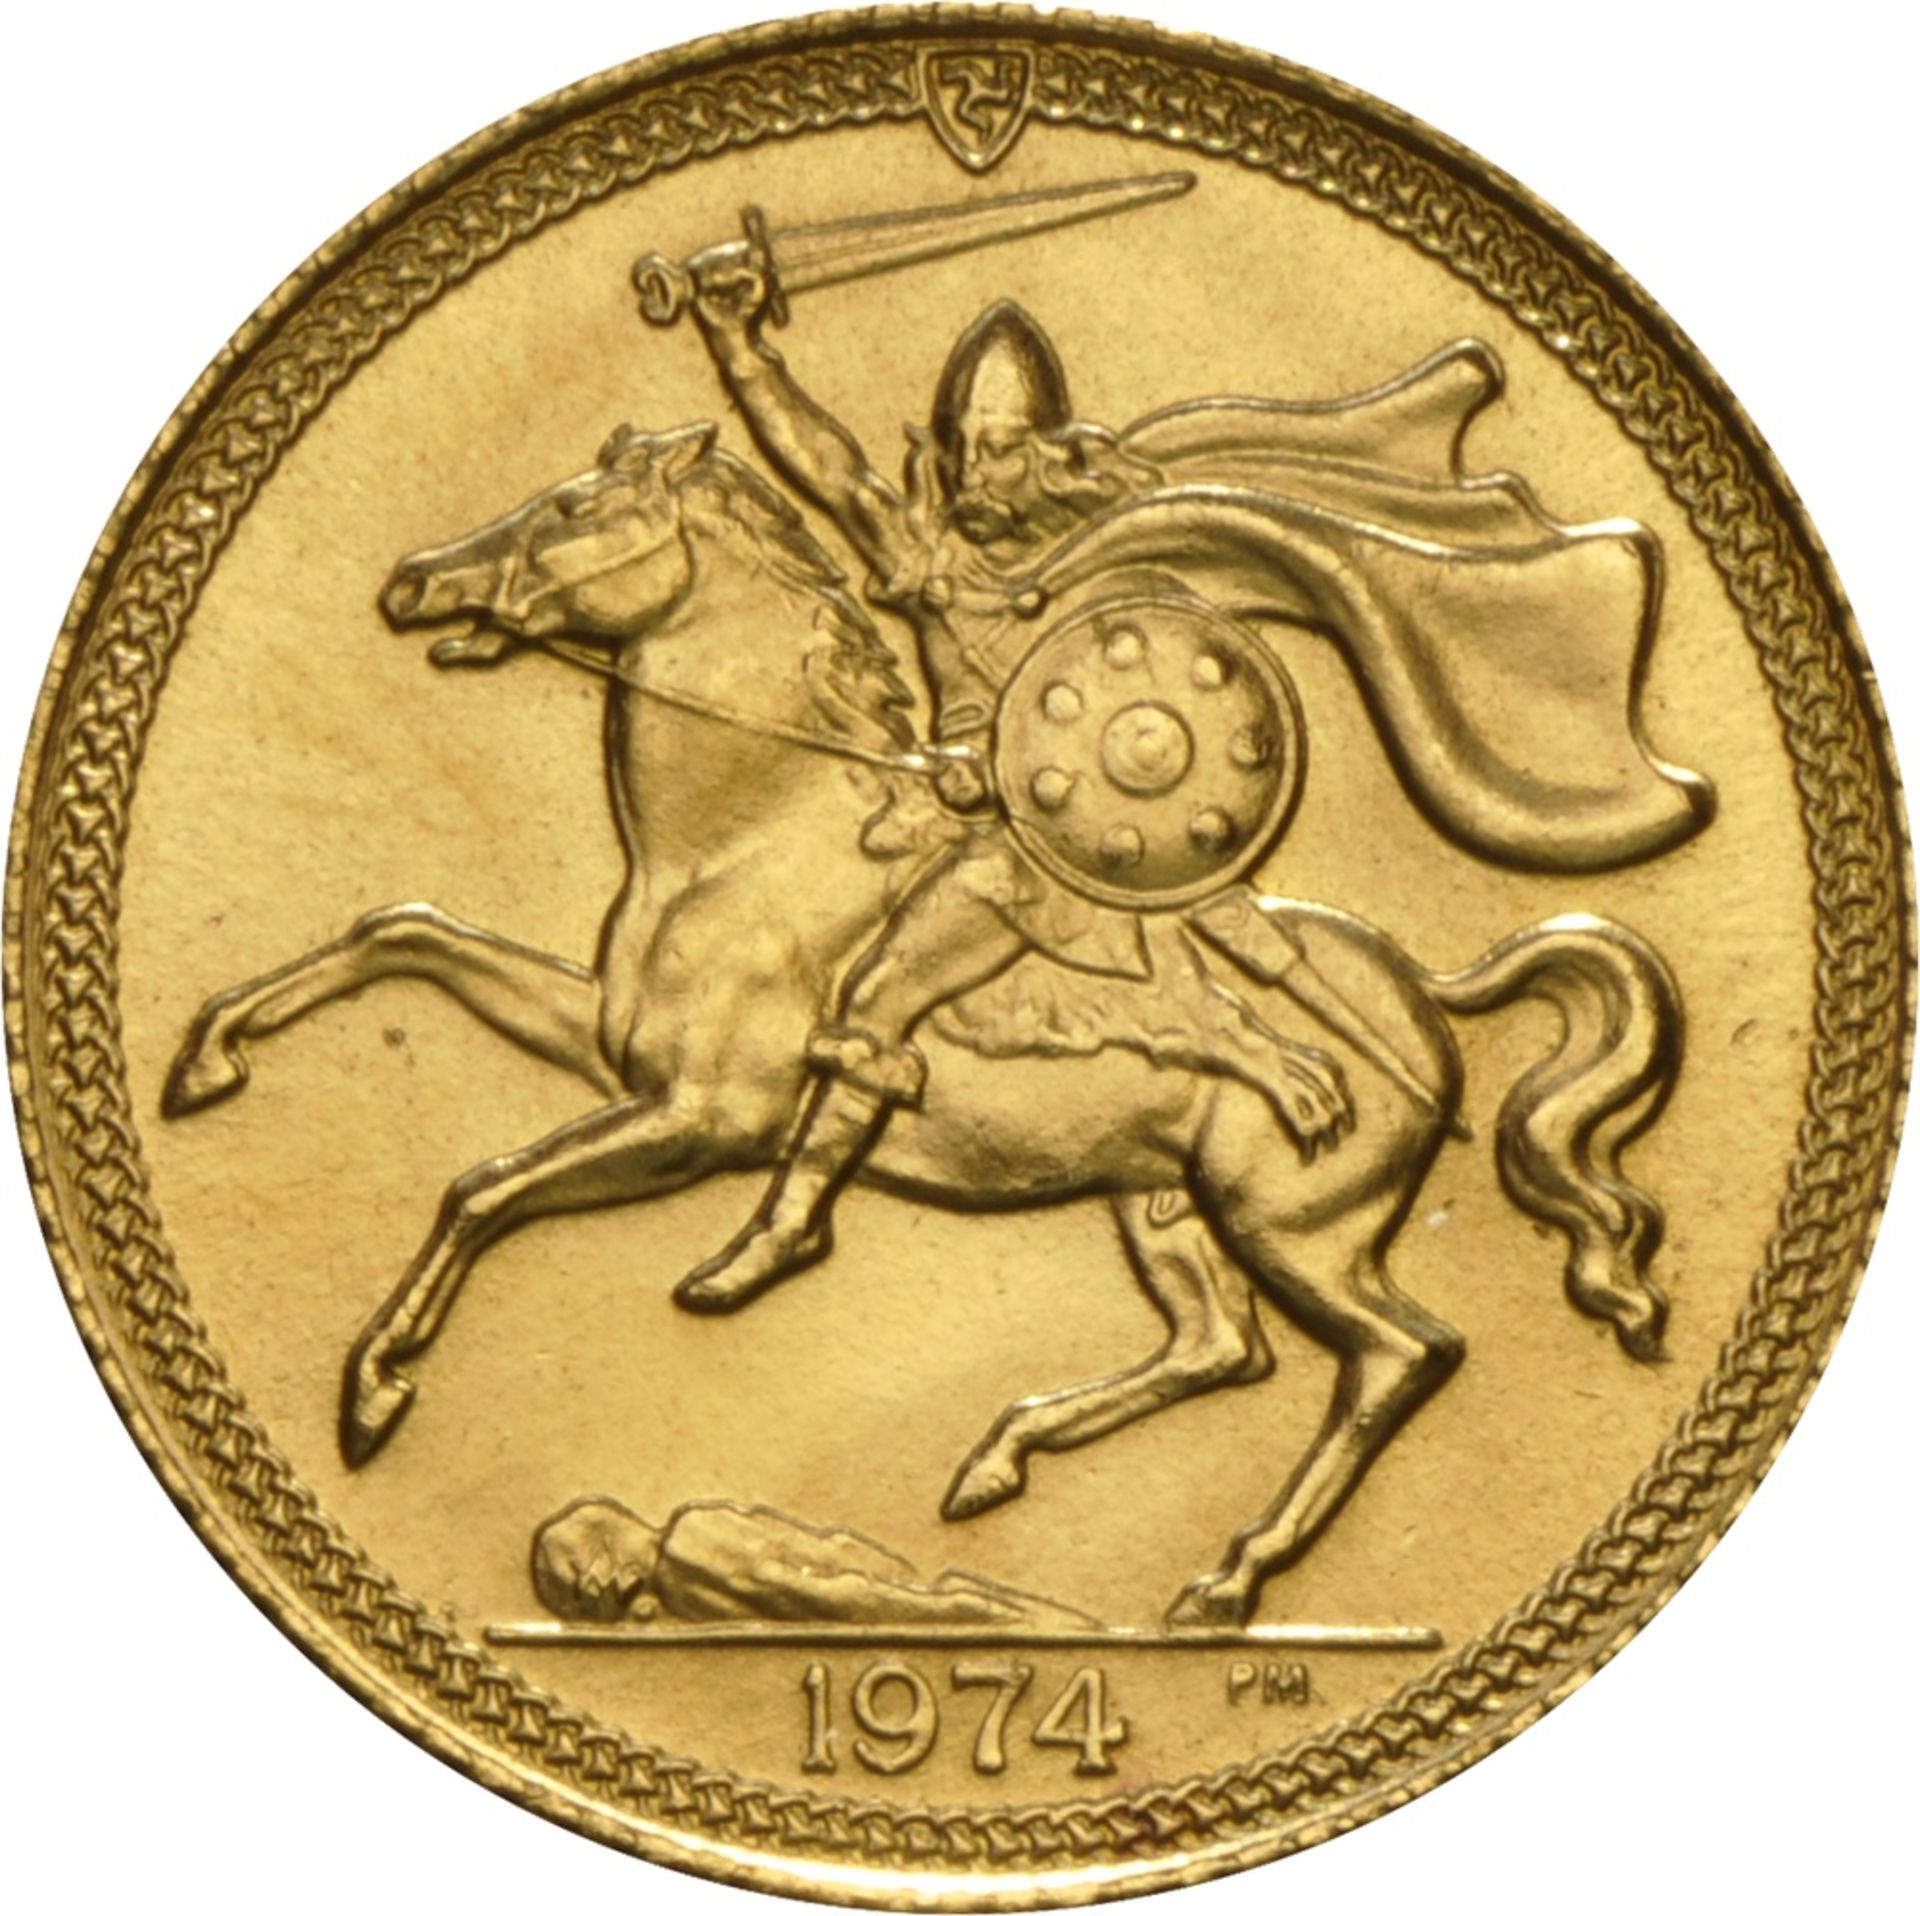 Isle of Man, Elizabeth II, gold Half-Sovereign - Image 2 of 2